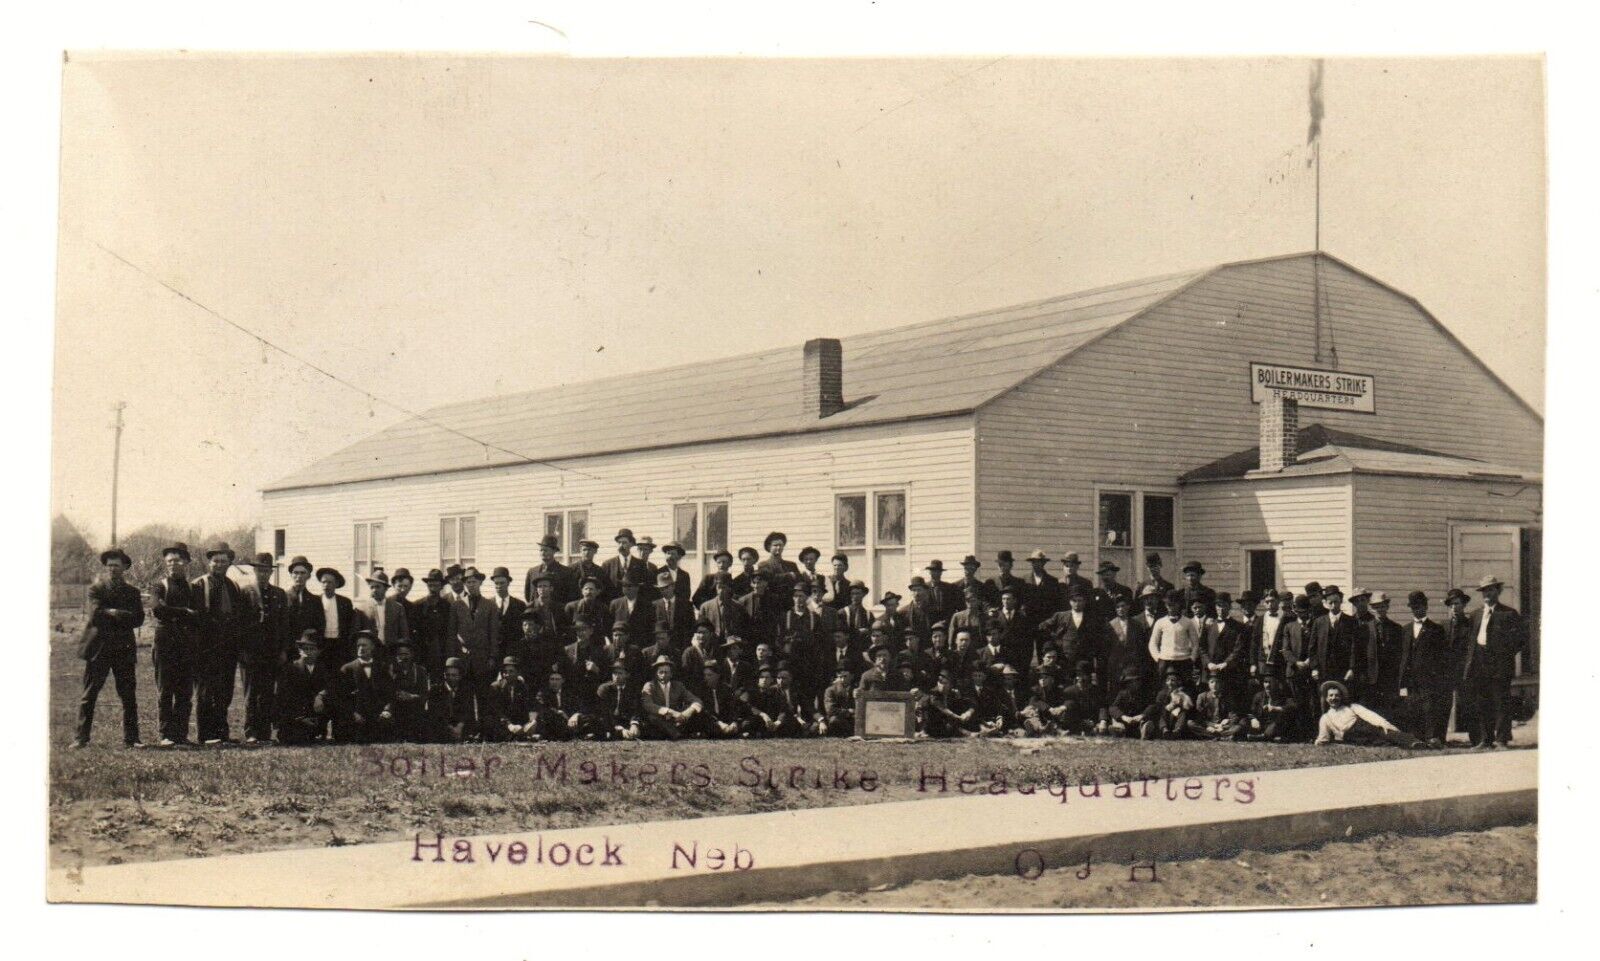 BOILER MAKERS STRIKE HQ Havelock NE Railway Shopmens labor union 1922 rppc photo